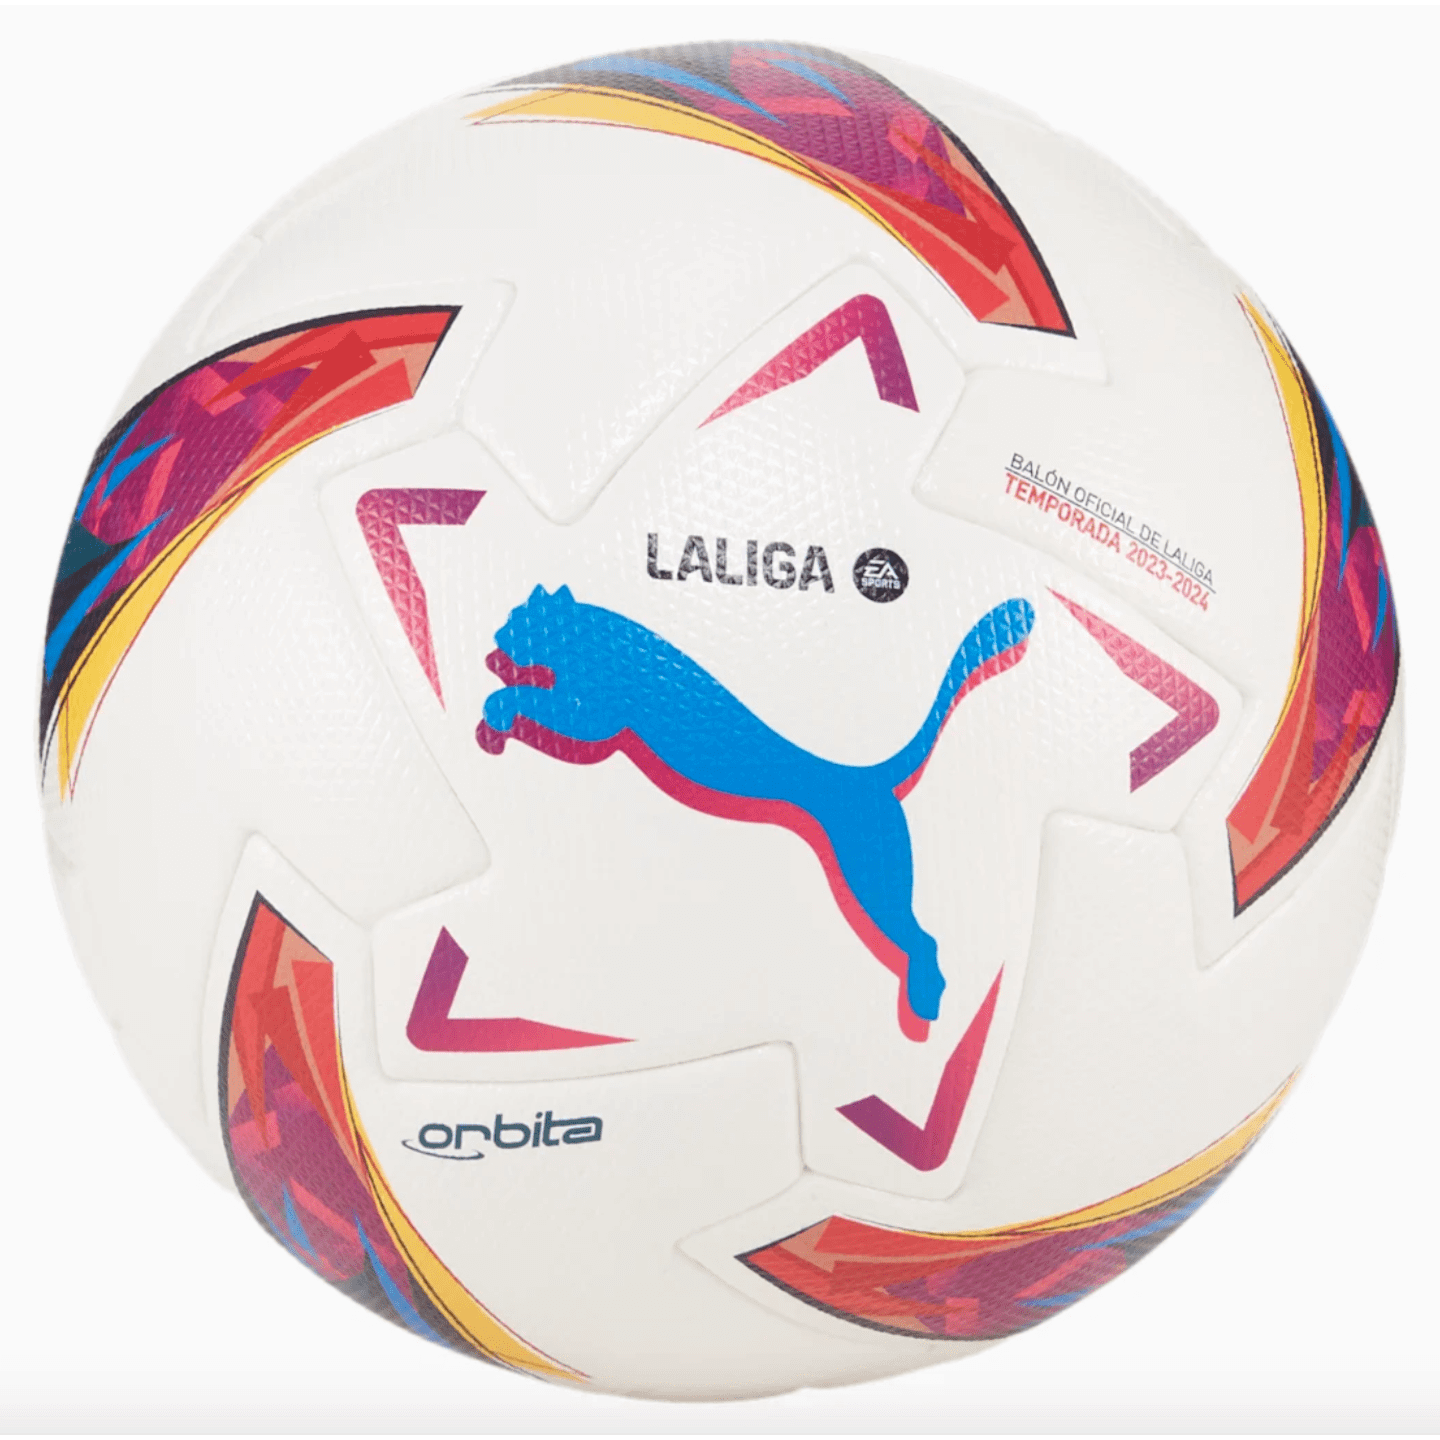 Puma Orbita La Liga 1 FIFA Quality Pro Match Ball